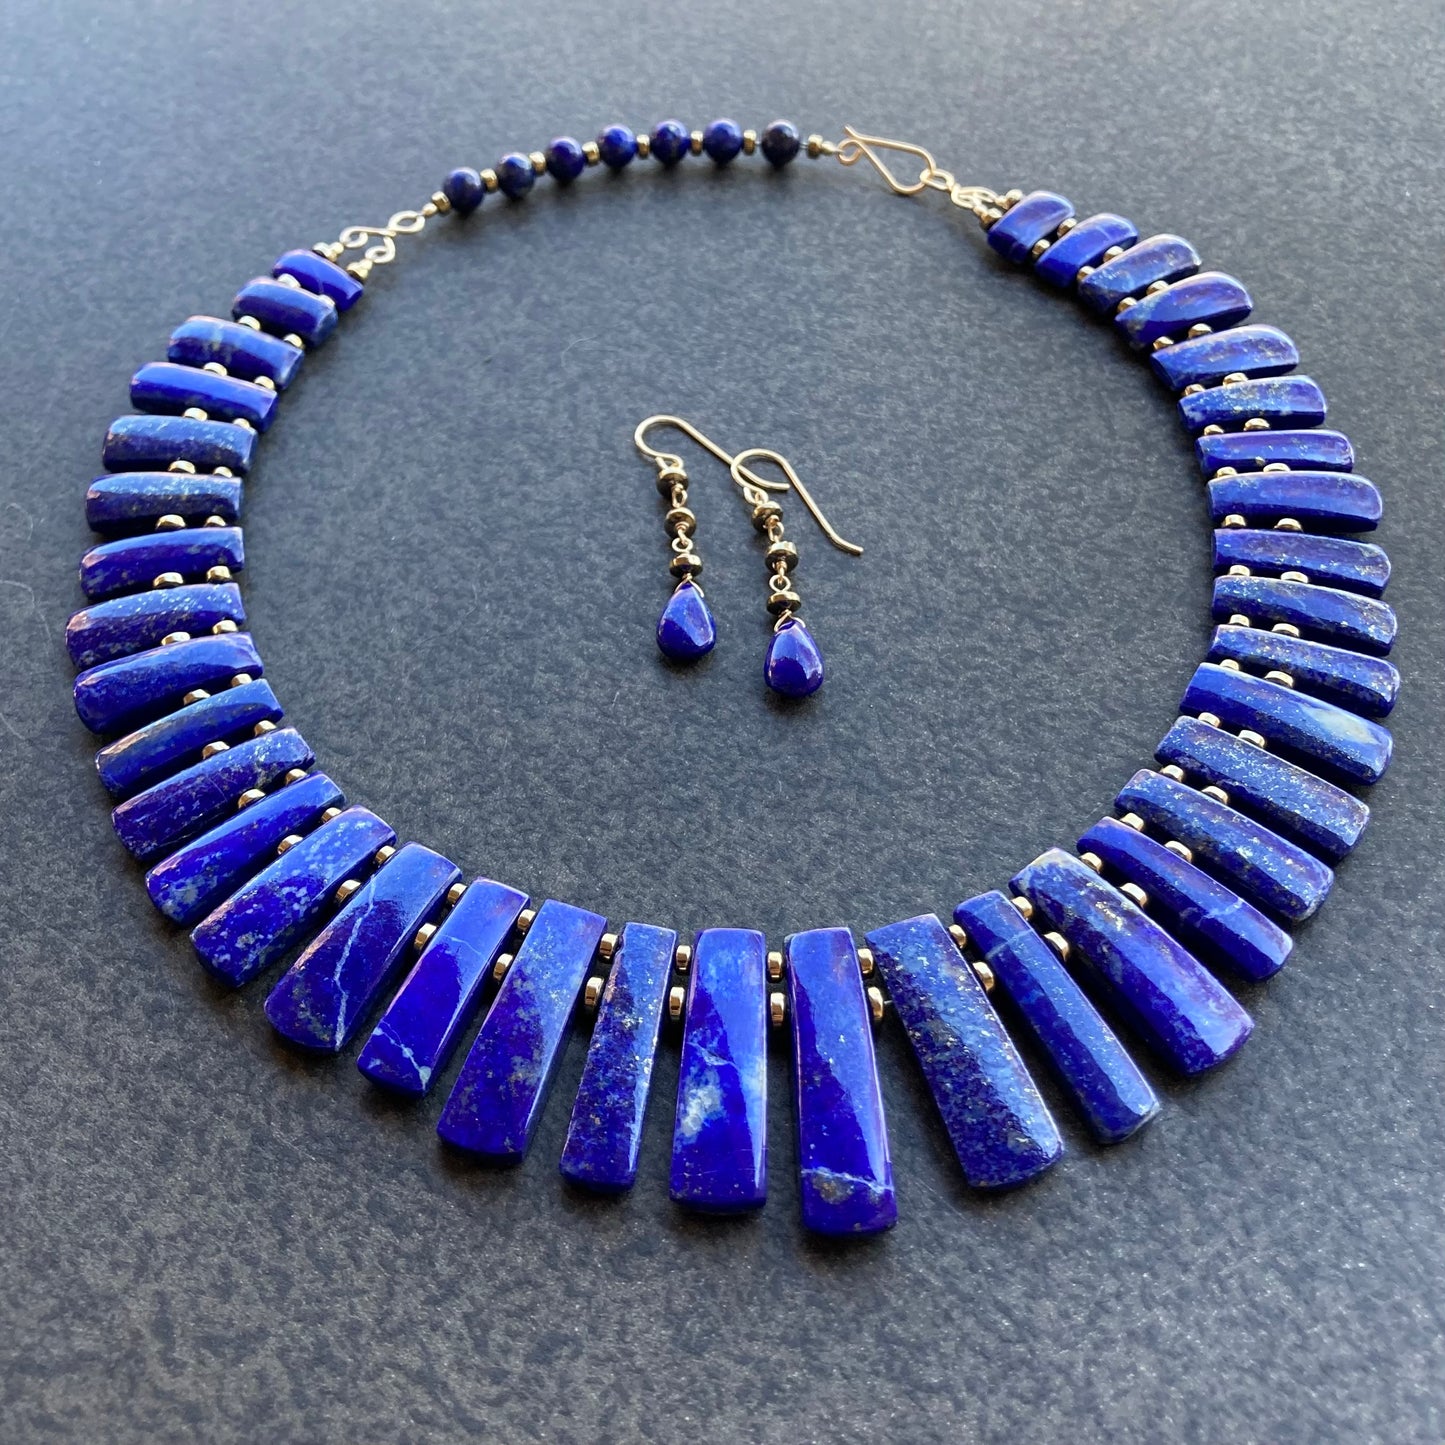 Lapis Lazuli, Pyrite & 14k Gold Earrings